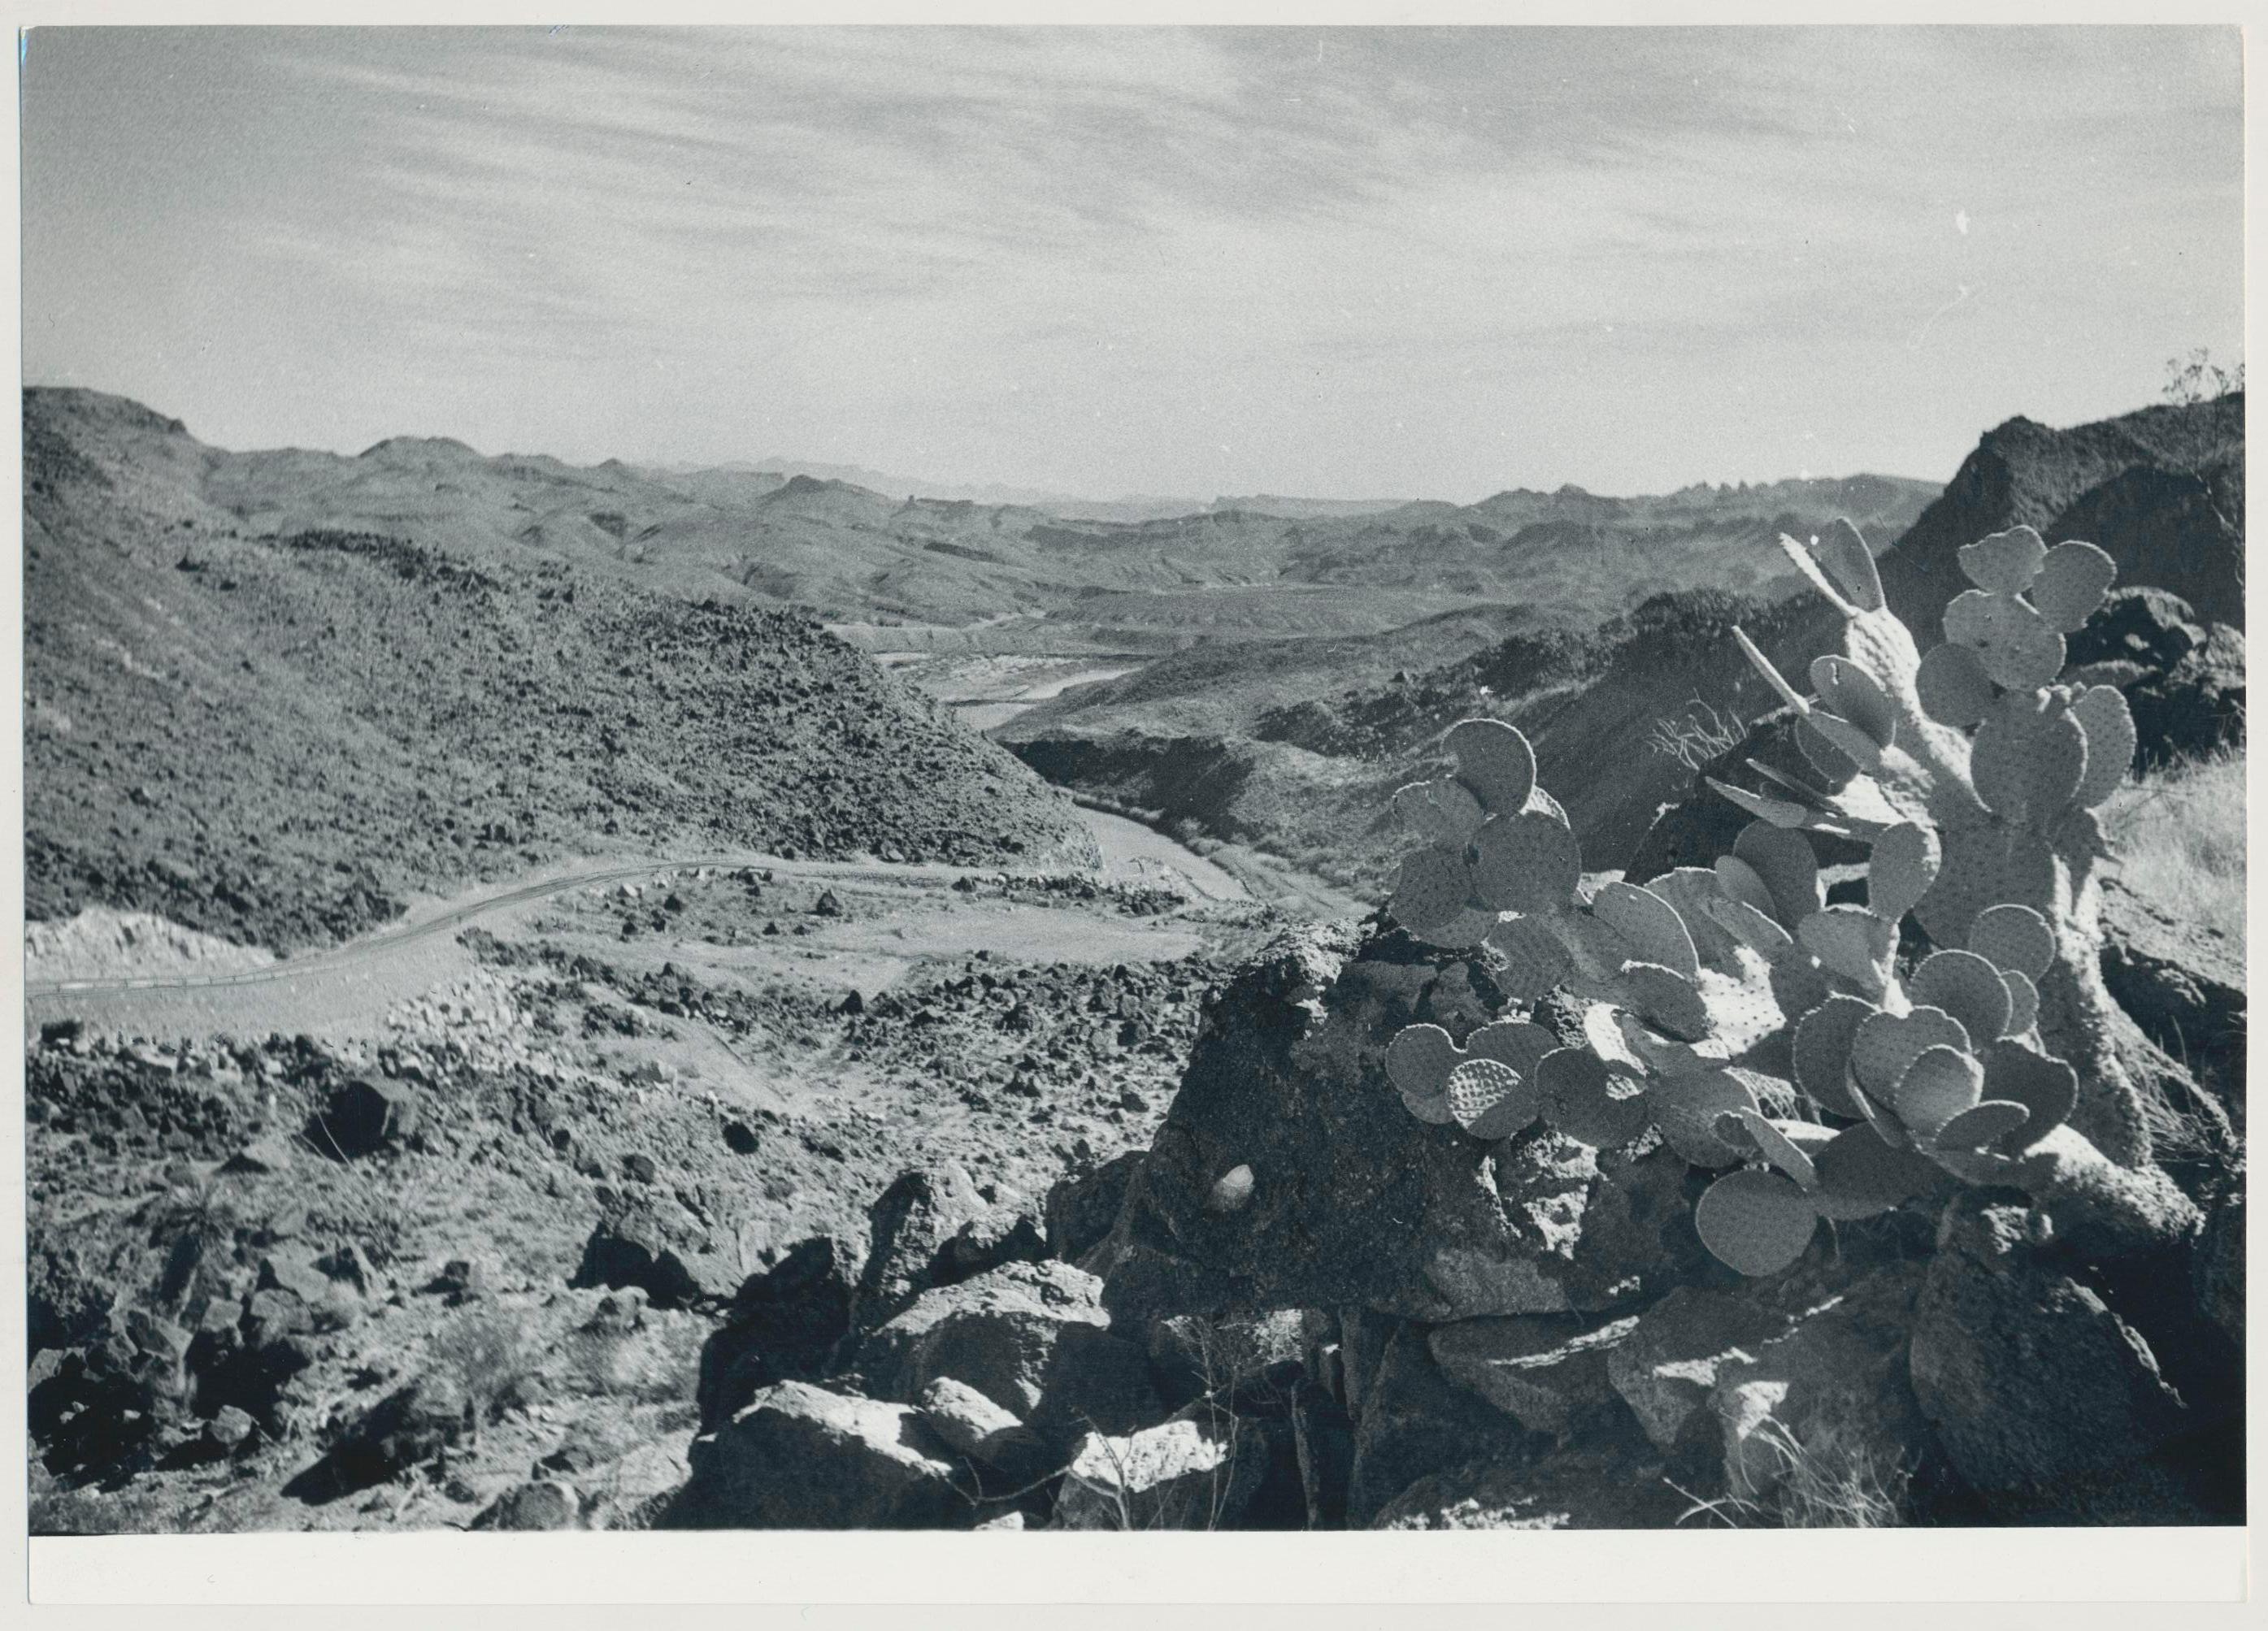 Erich Andres Black and White Photograph - Cacti, Rio Grande, Black and White, USA 1960s, 16, 4 x 23, 1 cm